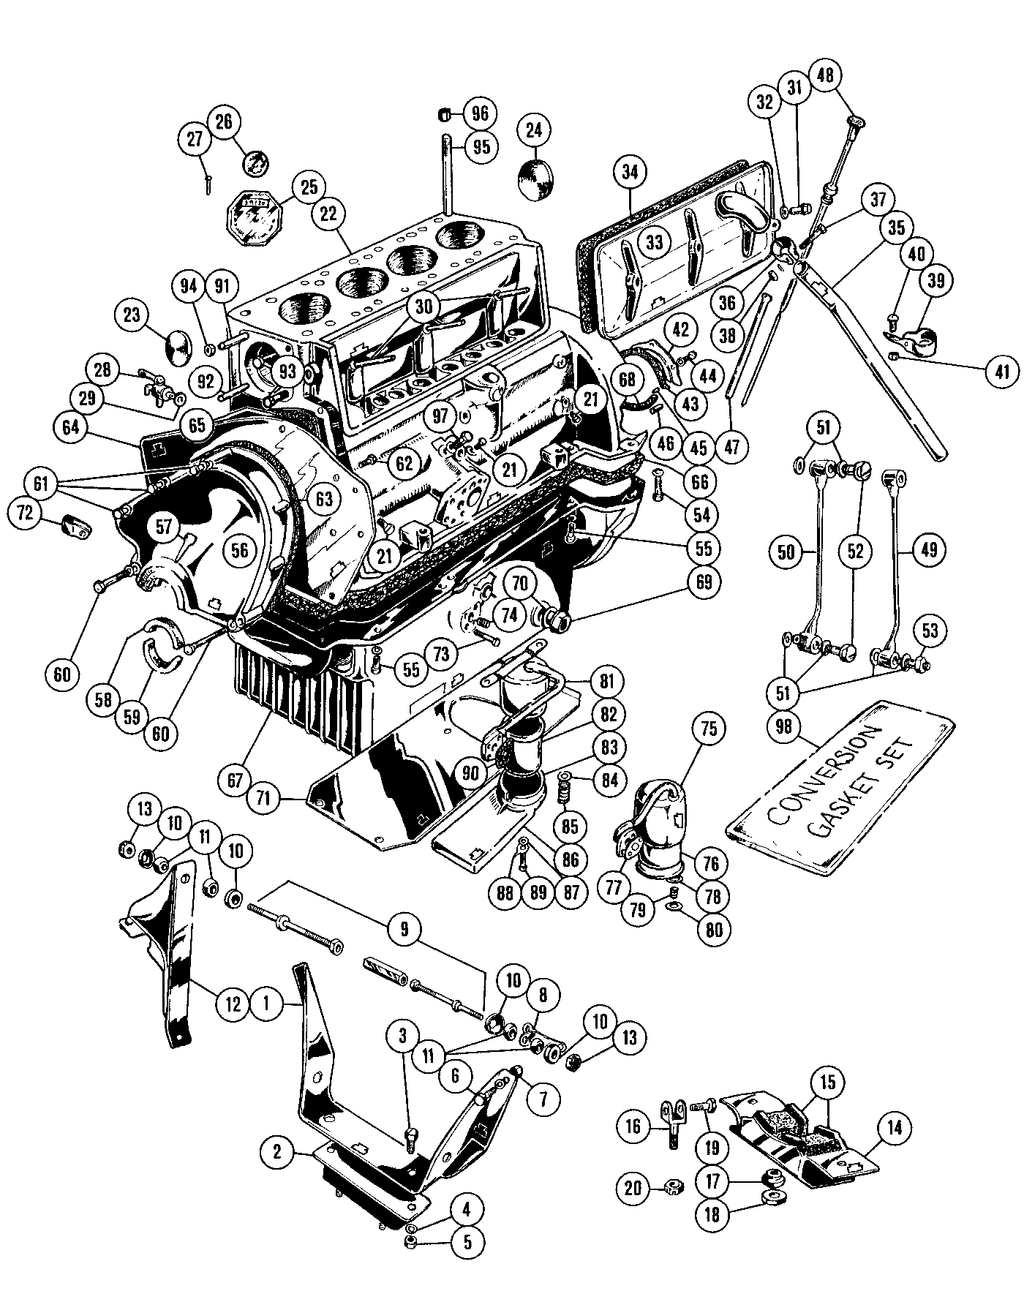 MGTD-TF 1949-1955 - Engine block & parts - 1